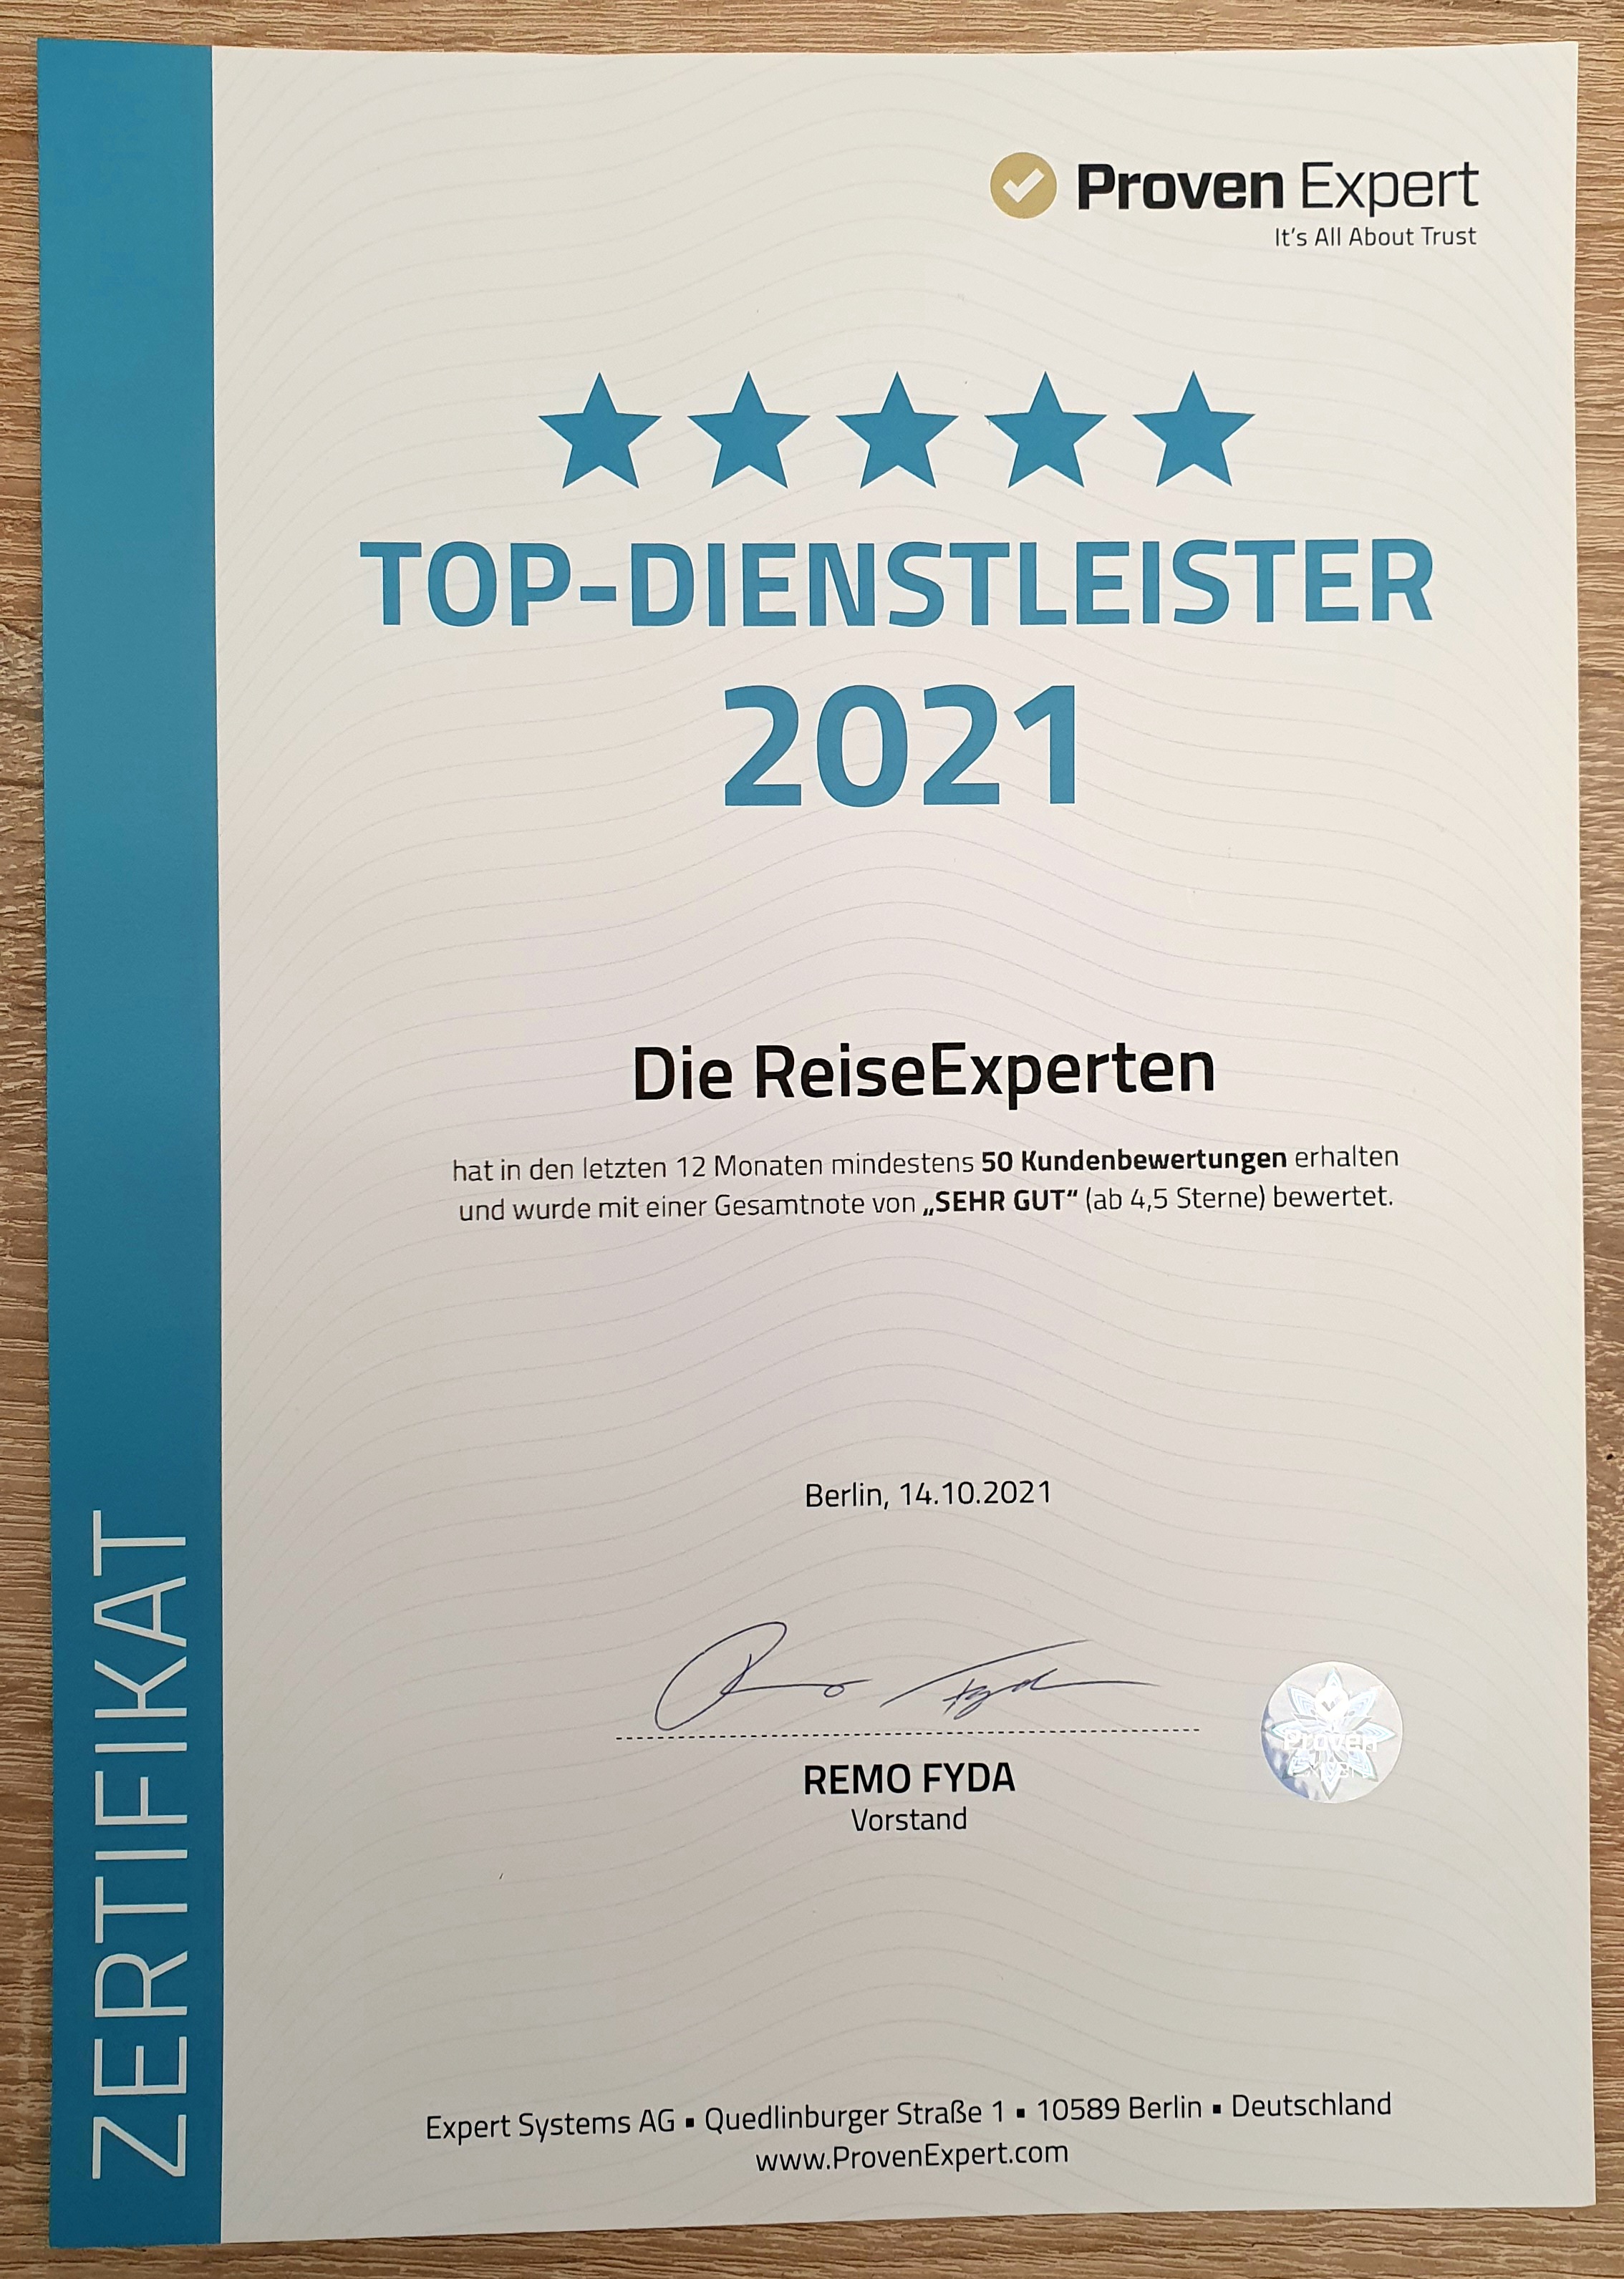 Proven Expert TOP-DIENSTLEISTER 2021